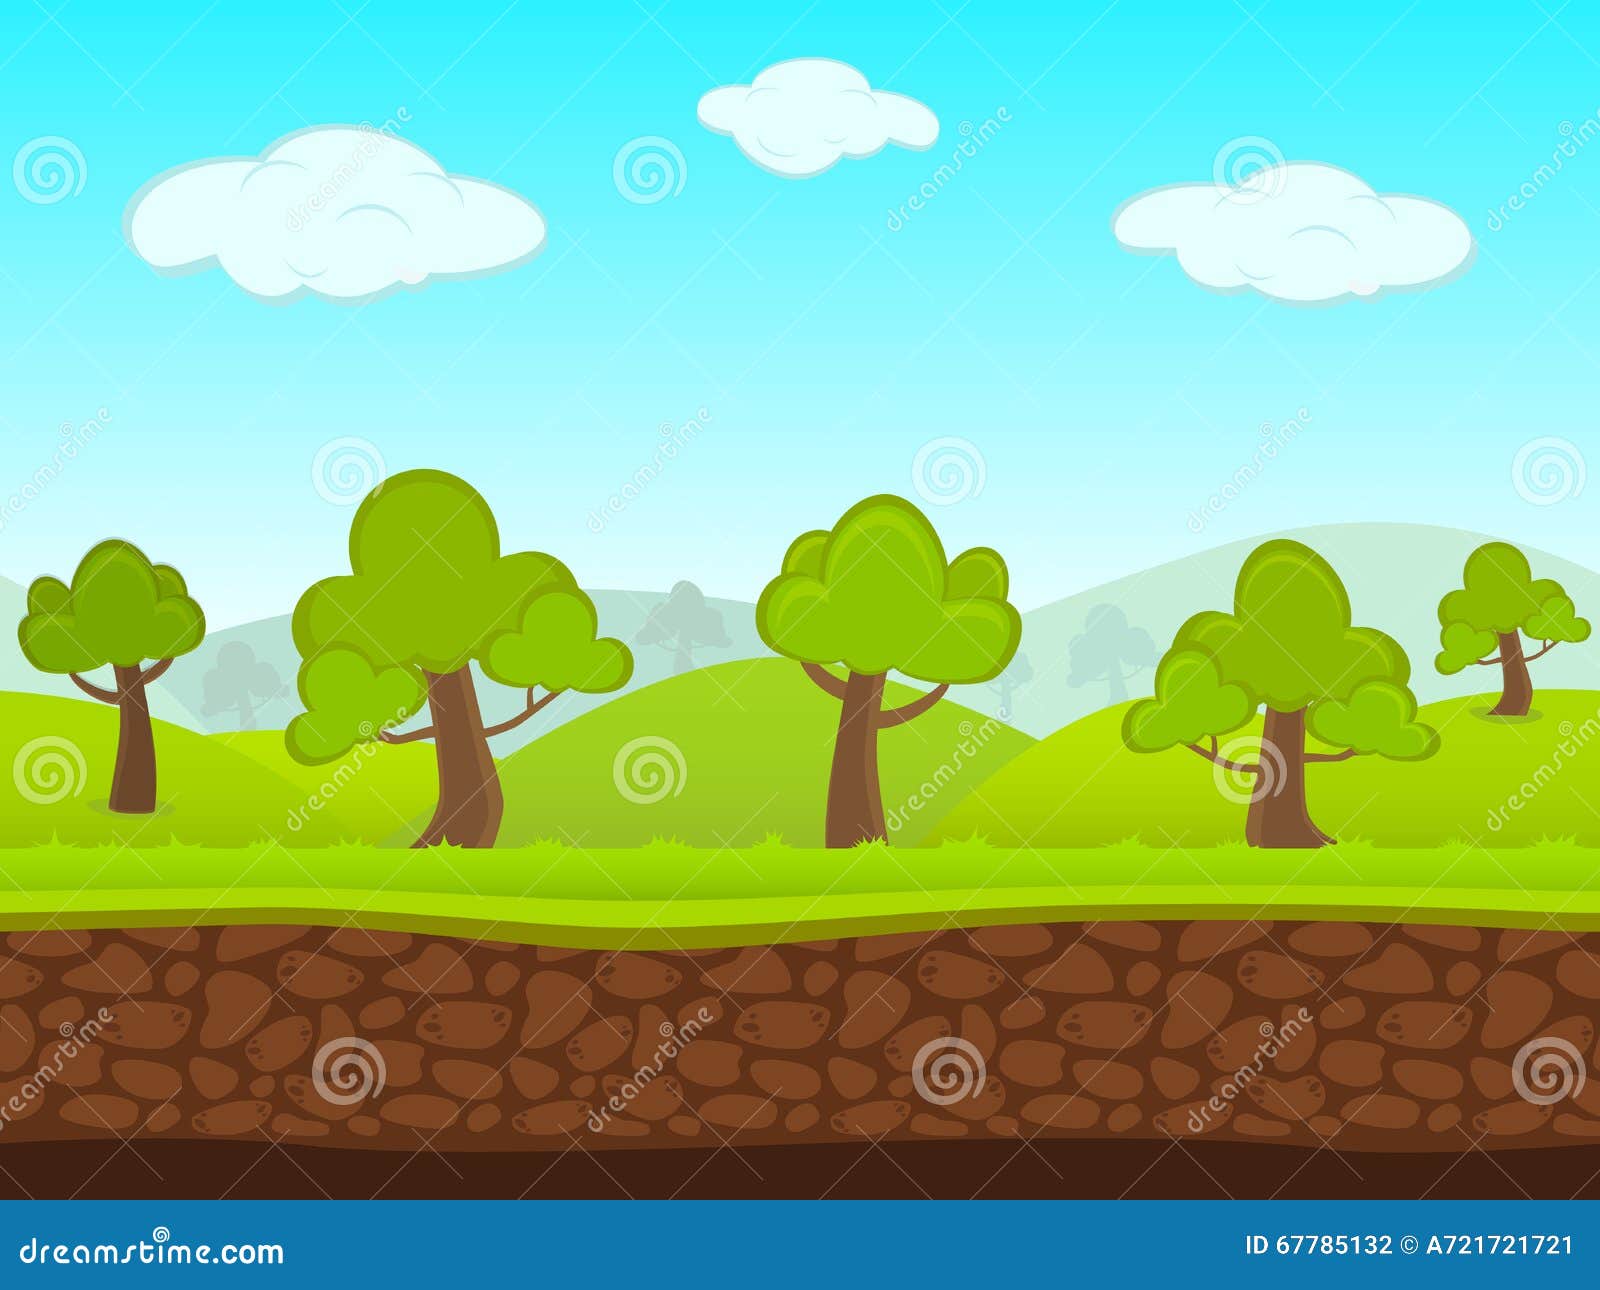 Cartoon background stock vector. Illustration of leaf - 67785132